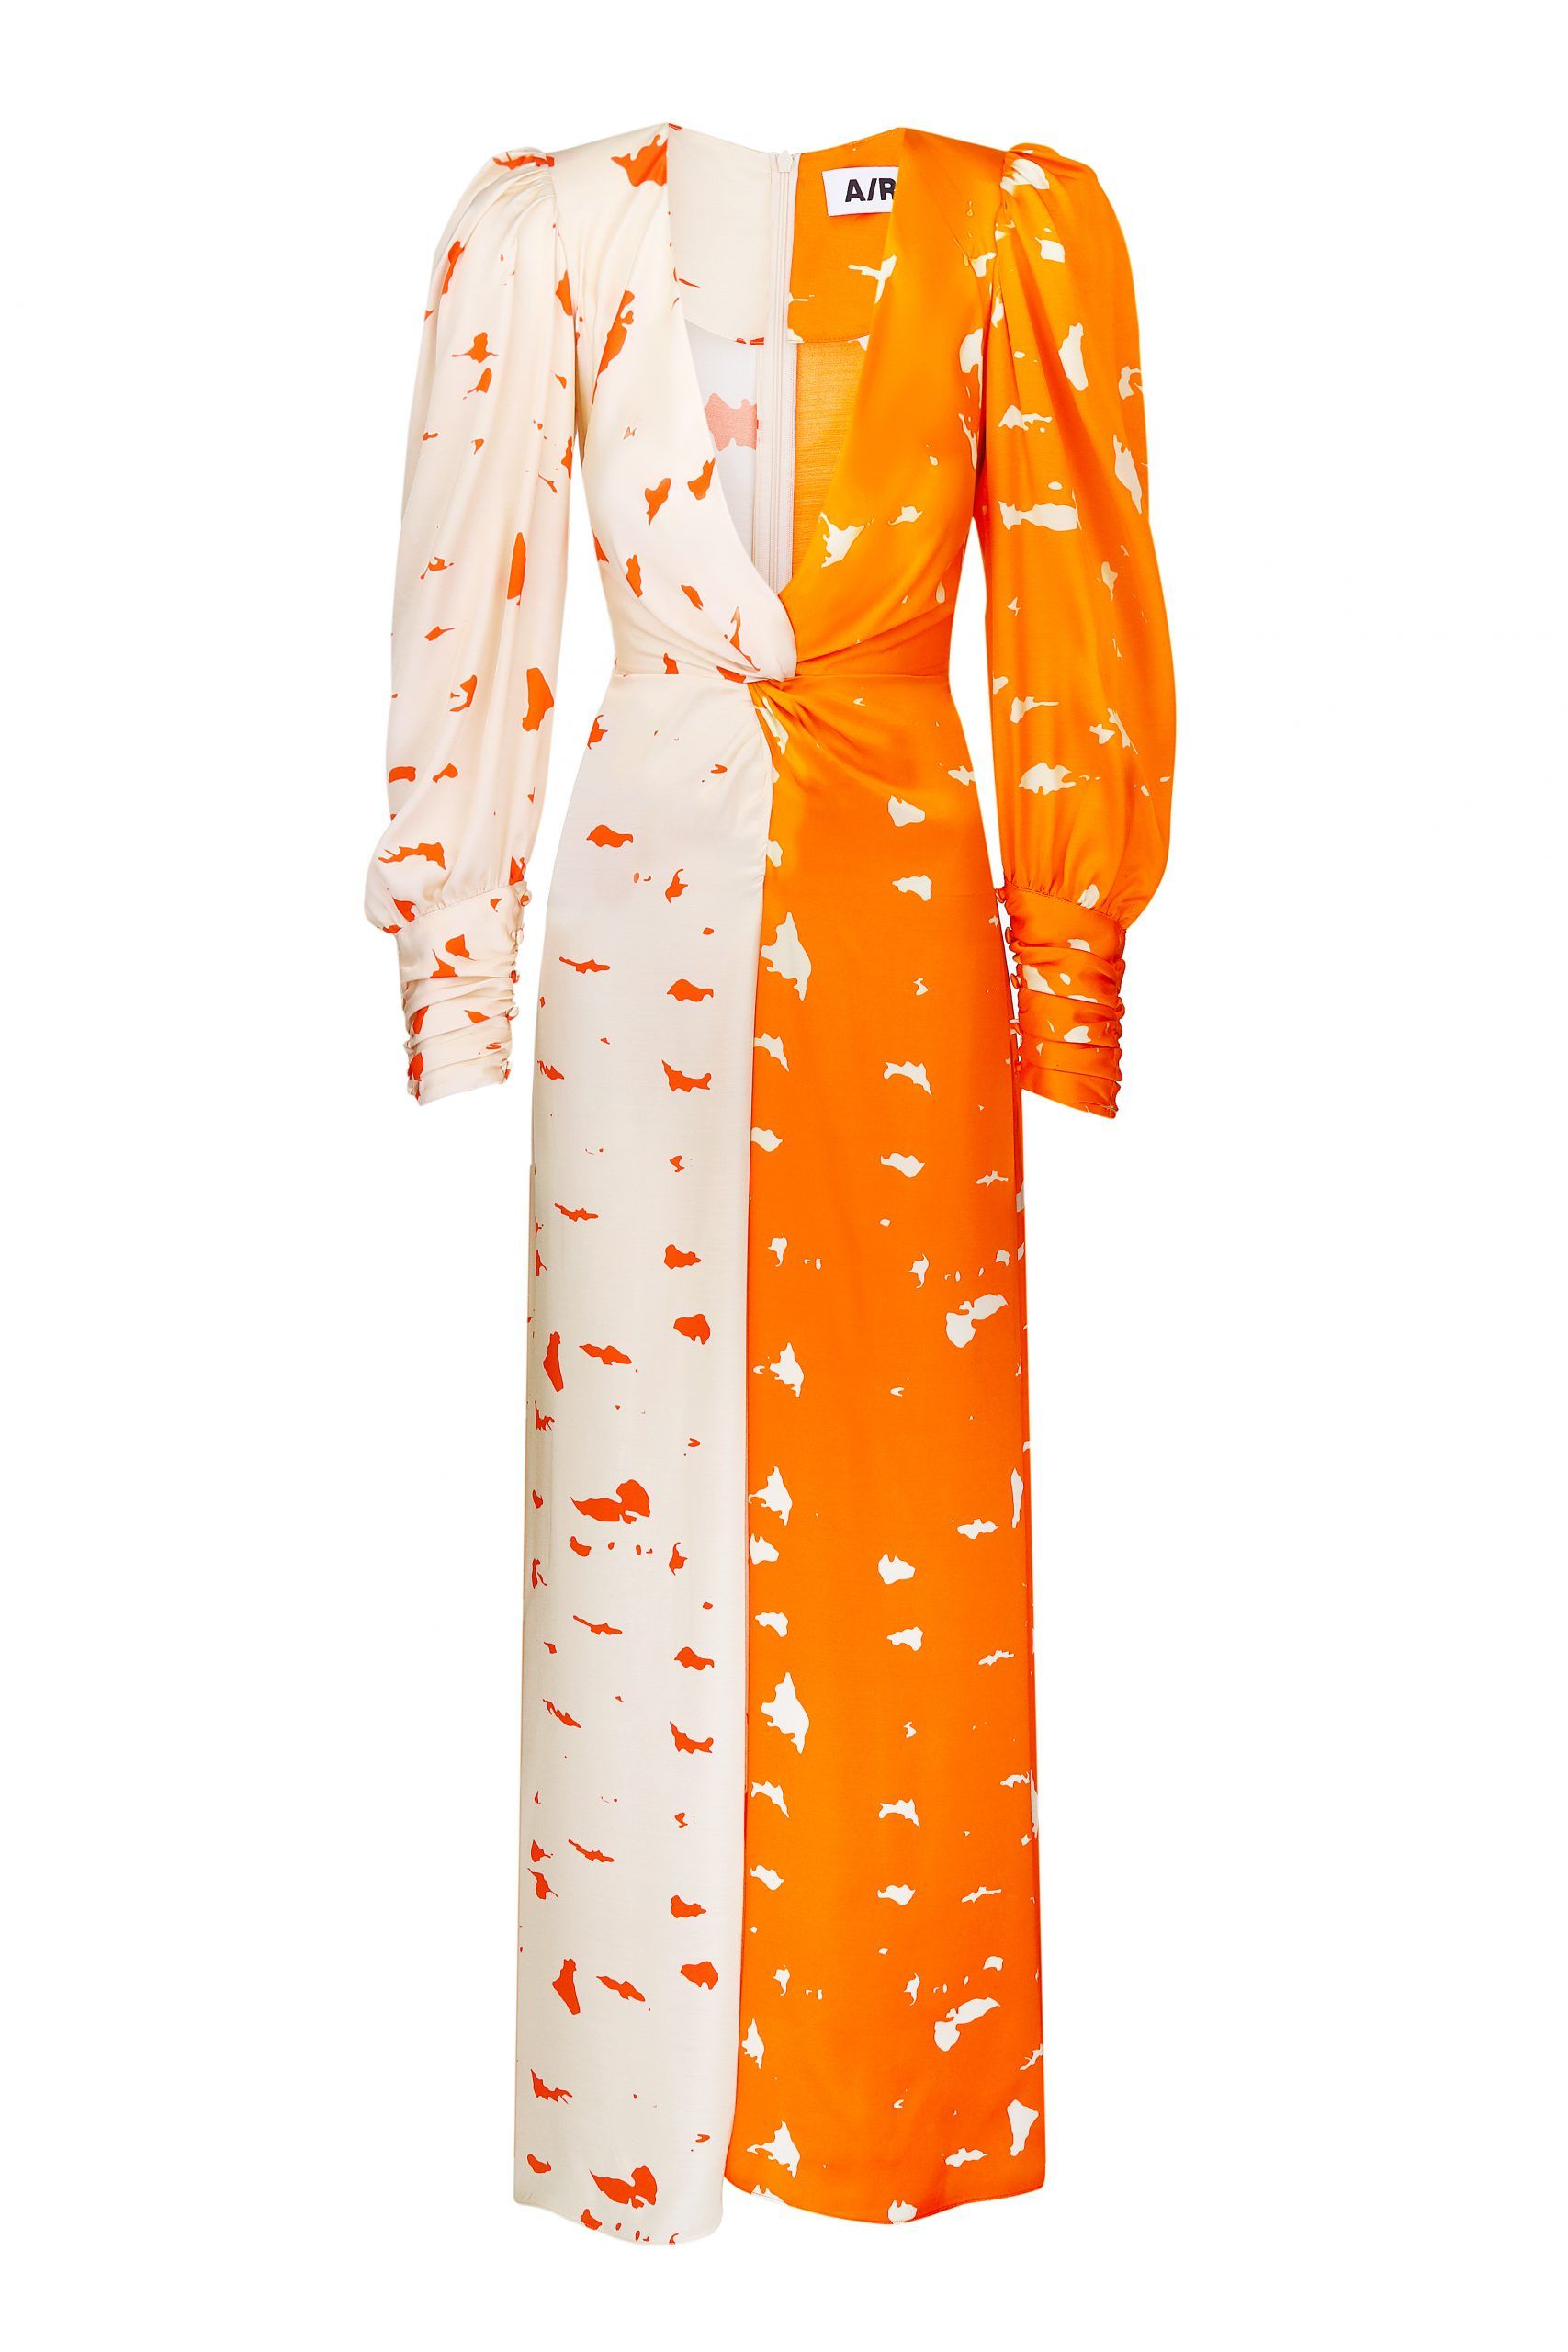 ARaise vestido largo dos colores naranja estampado manga larga 5 scaled